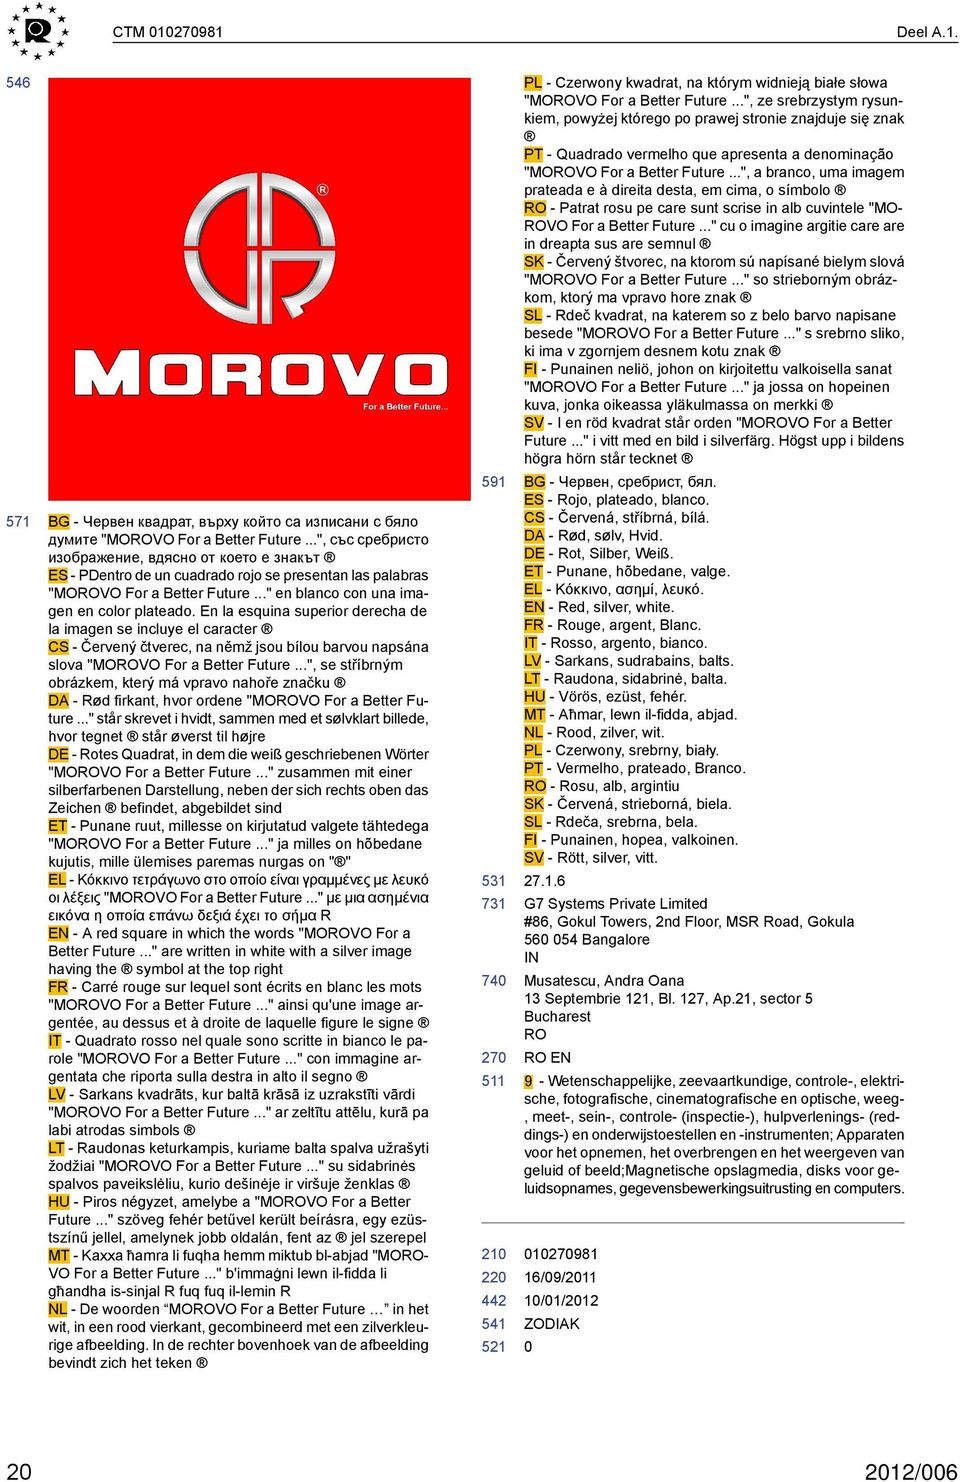 En la esquina superior derecha de la imagen se incluye el caracter CS - Červený čtverec, na němž jsou bílou barvou napsána slova "MOROVO For a Better Future.